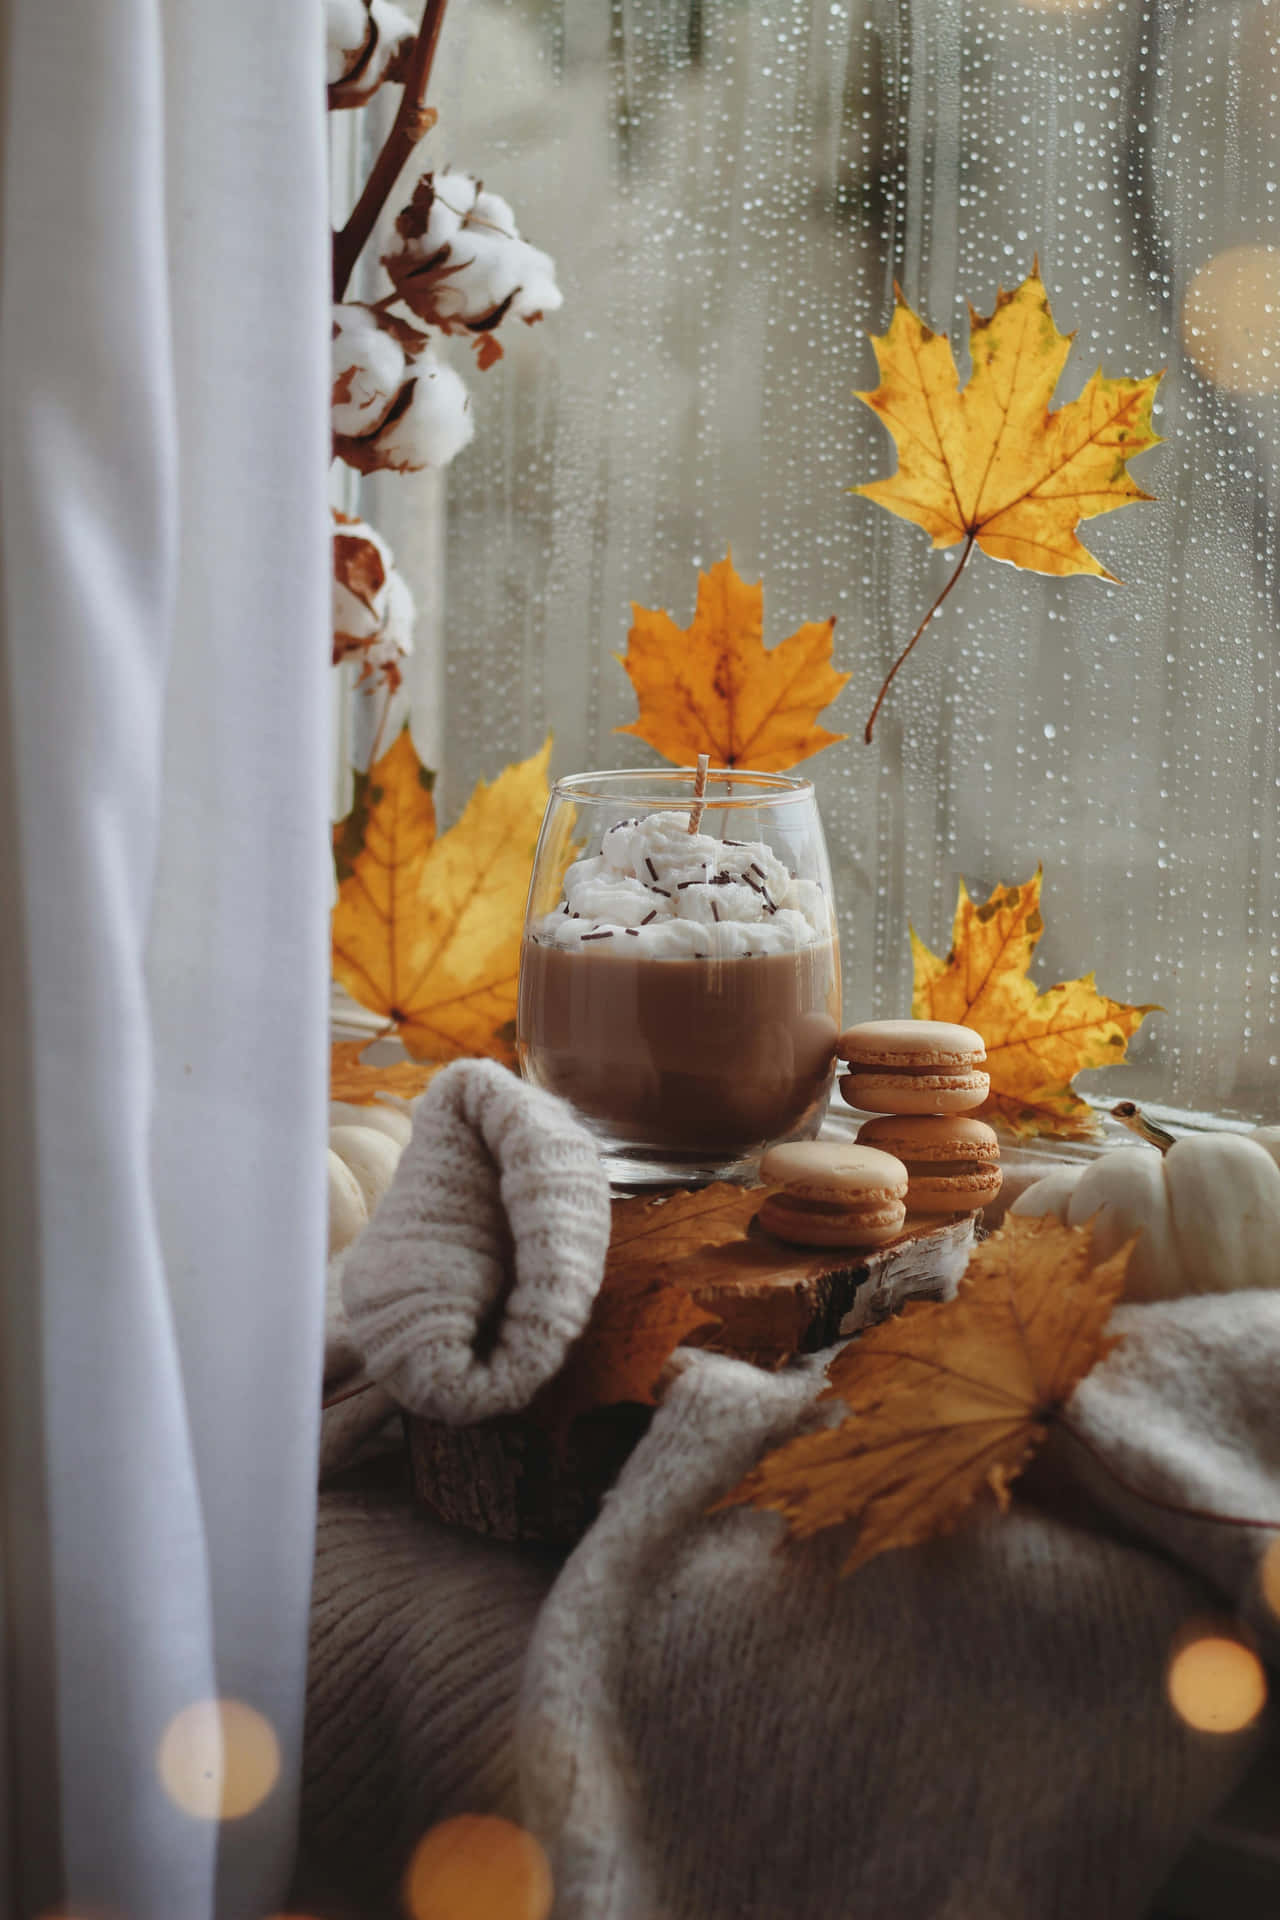 Cozy Autumn Comfort Drinkand Snacks Wallpaper